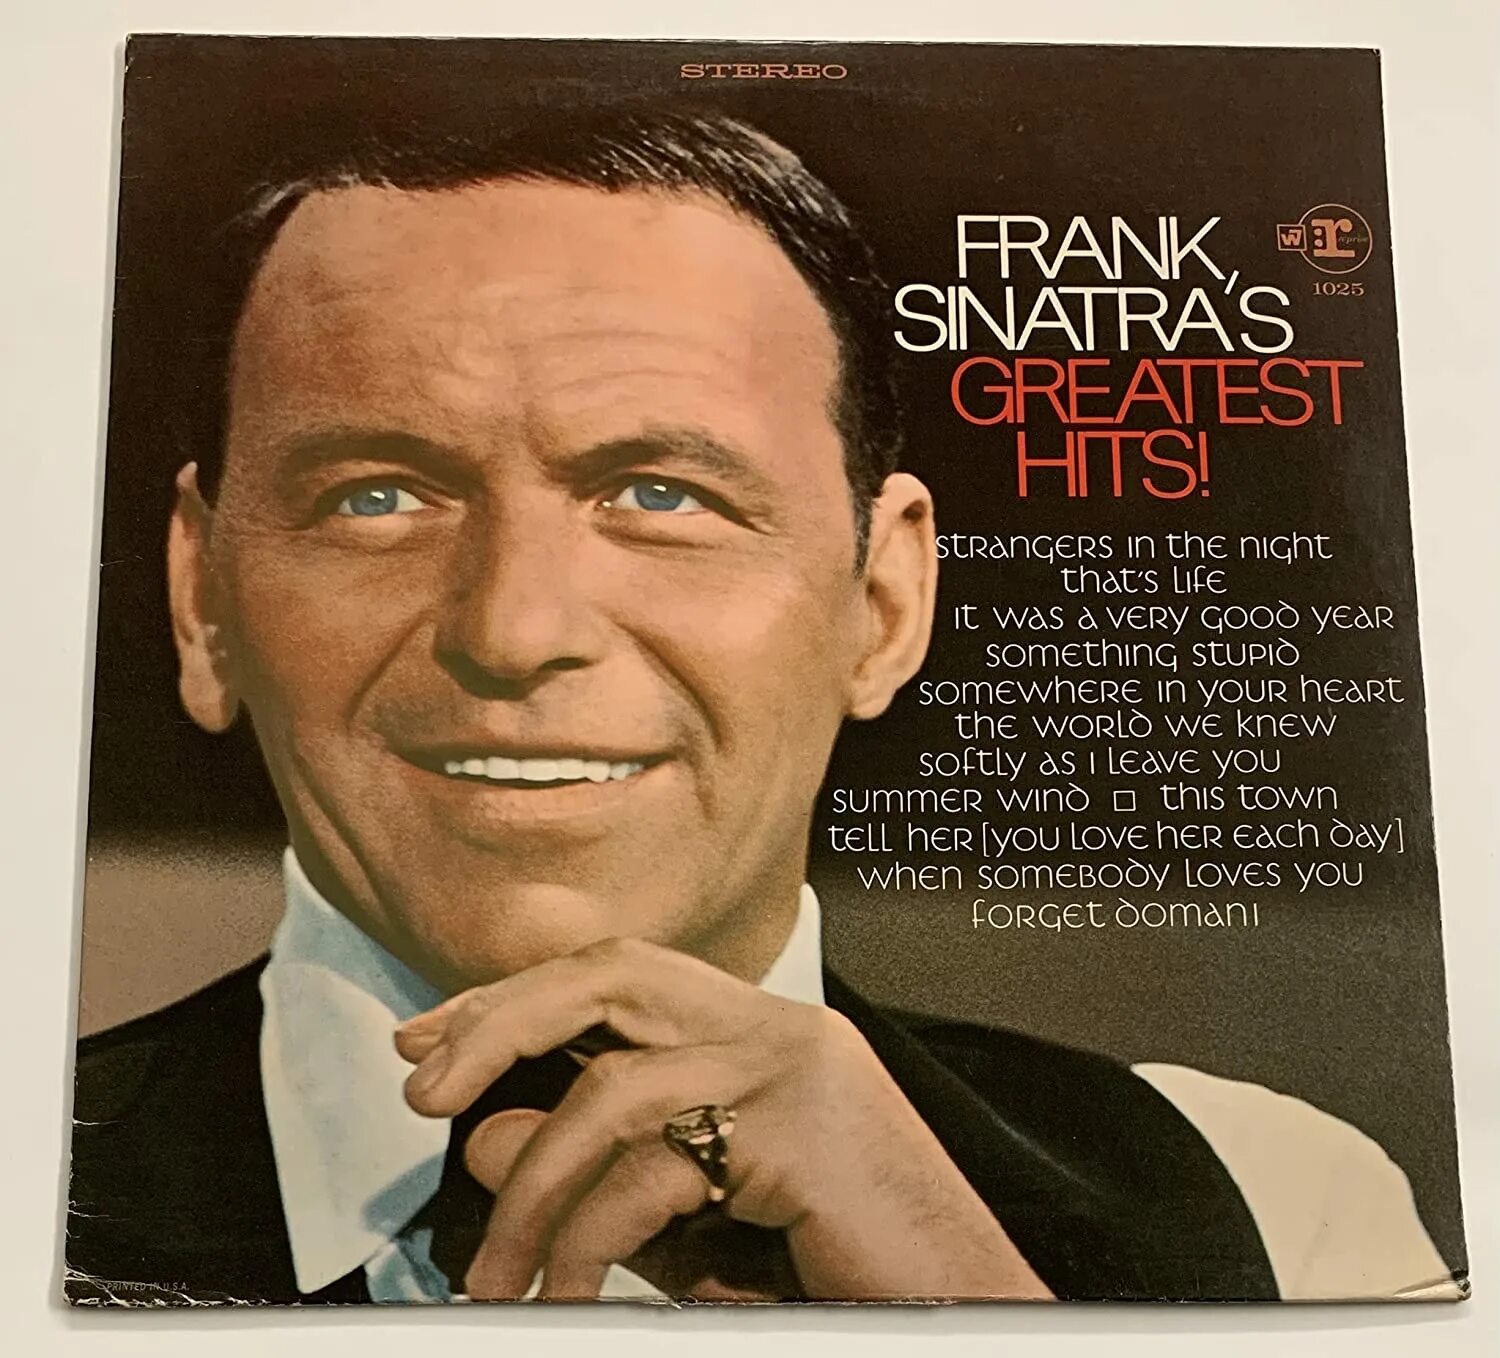 Frank Sinatra Greatest Hits пластинка. Frank Sinatra 1990. Часы Frank Sinatra. Фрэнк Синатра песни. Песня фрэнка синатры на русском языке